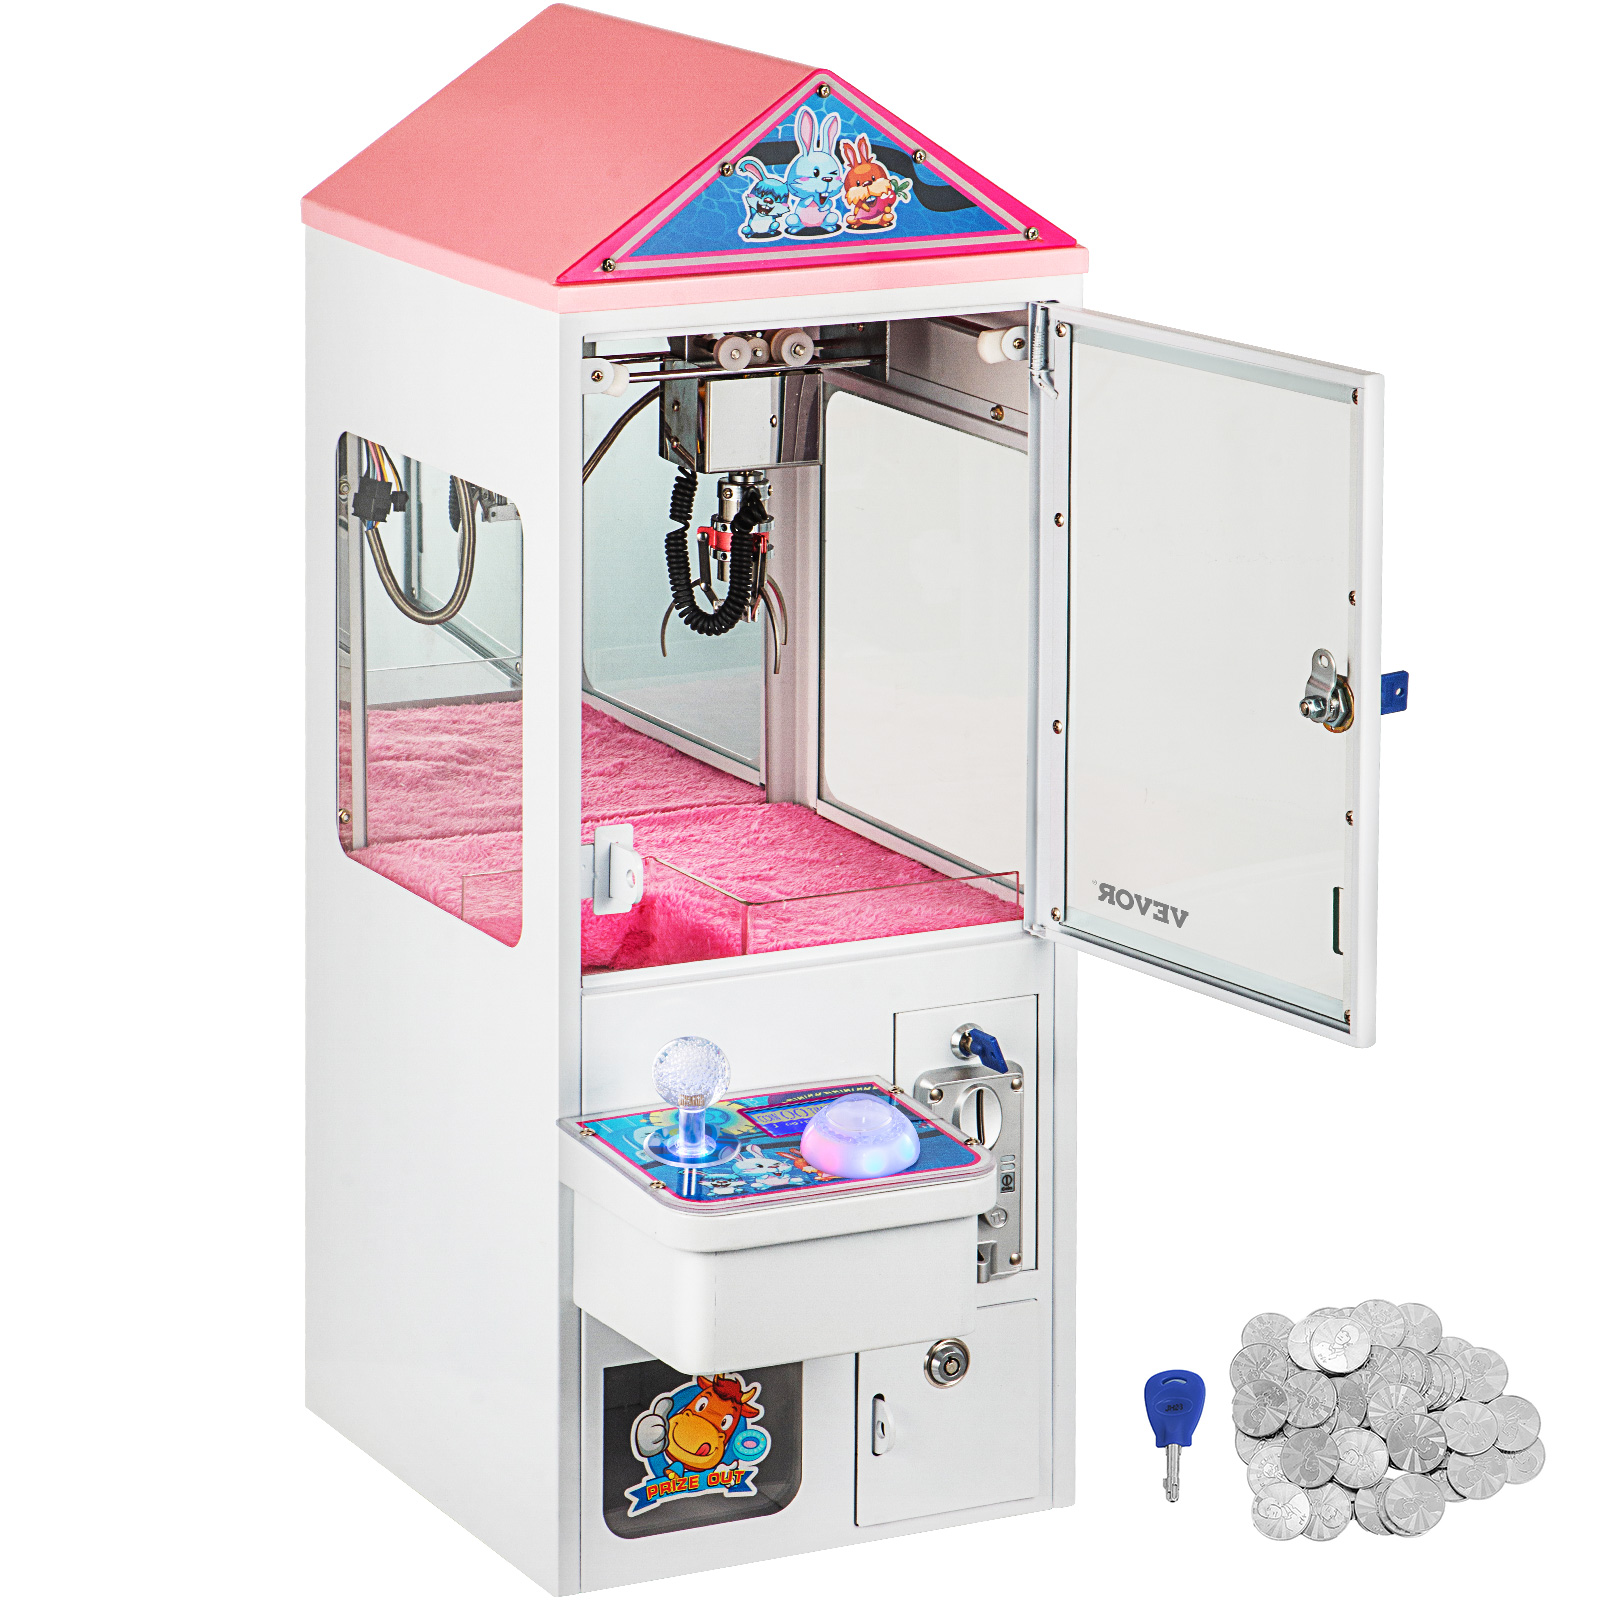 Vevor 110v Mini Claw Crane Machine Metal Case Bar Candy Toy Catcher Shake-proof от Vevor Many GEOs